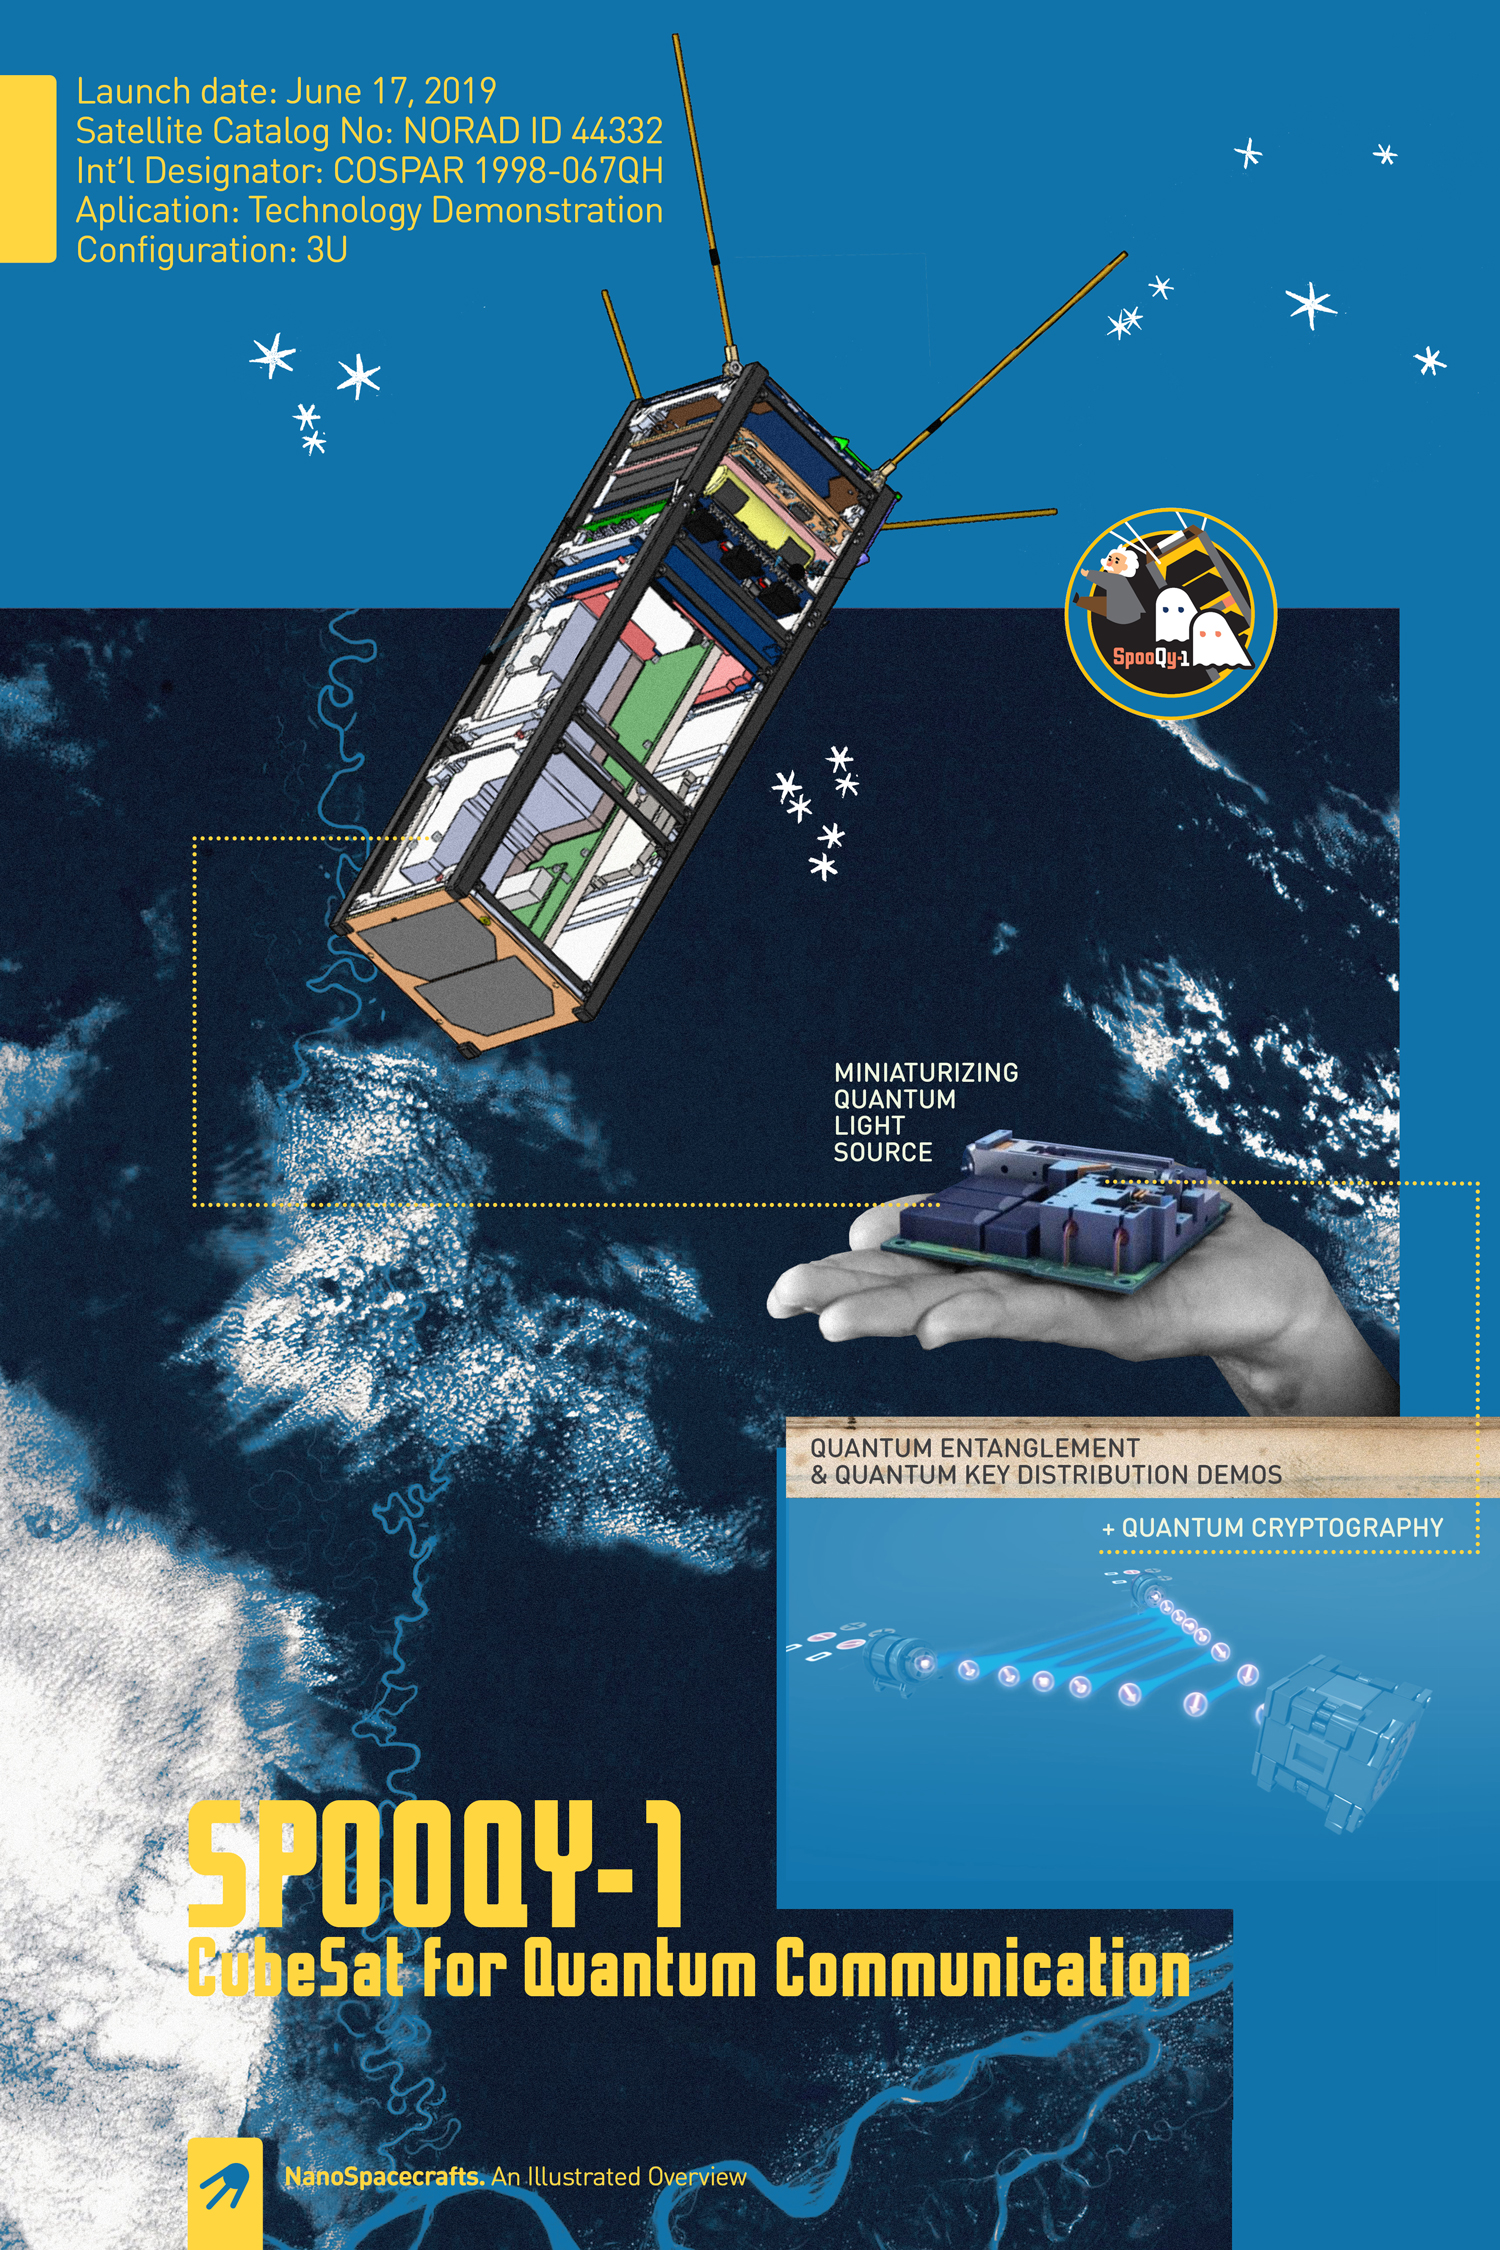 SPOOQY-1 CubeSat for Quantum Communication